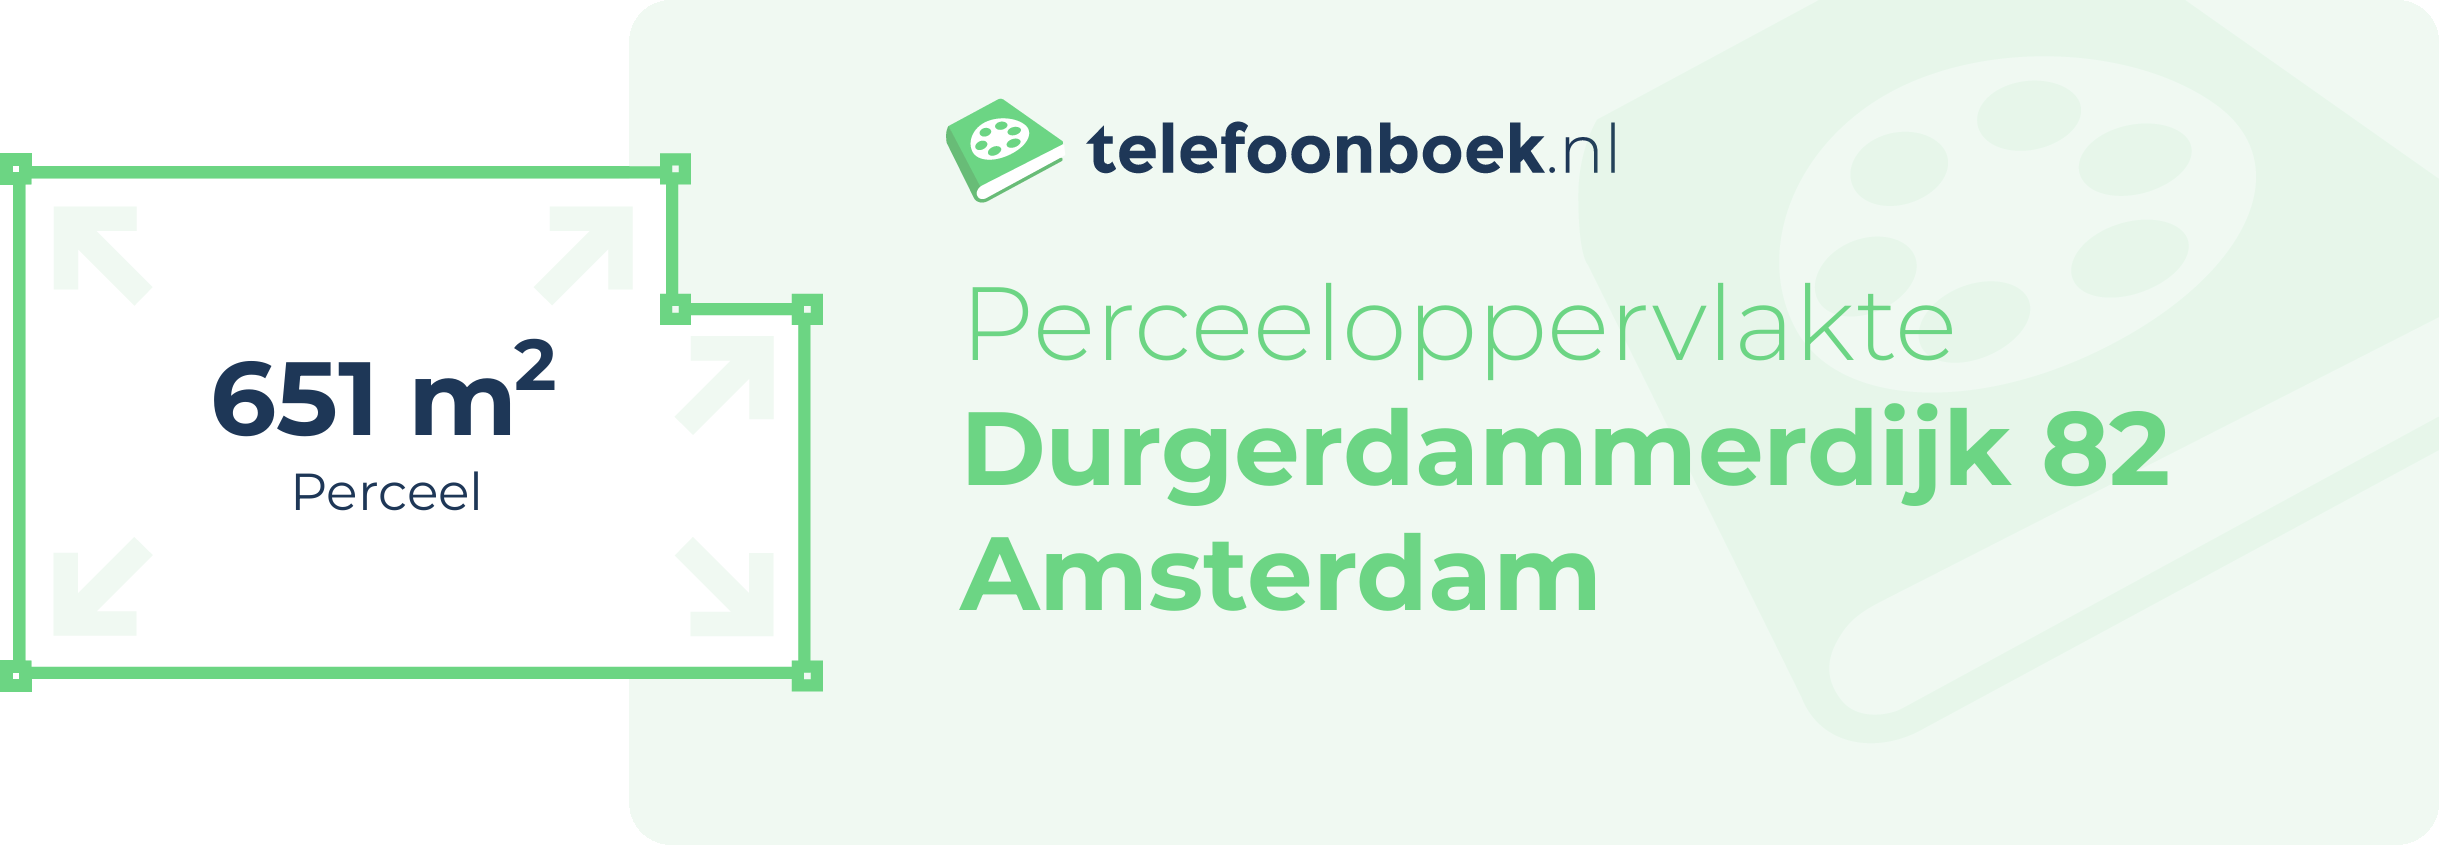 Perceeloppervlakte Durgerdammerdijk 82 Amsterdam